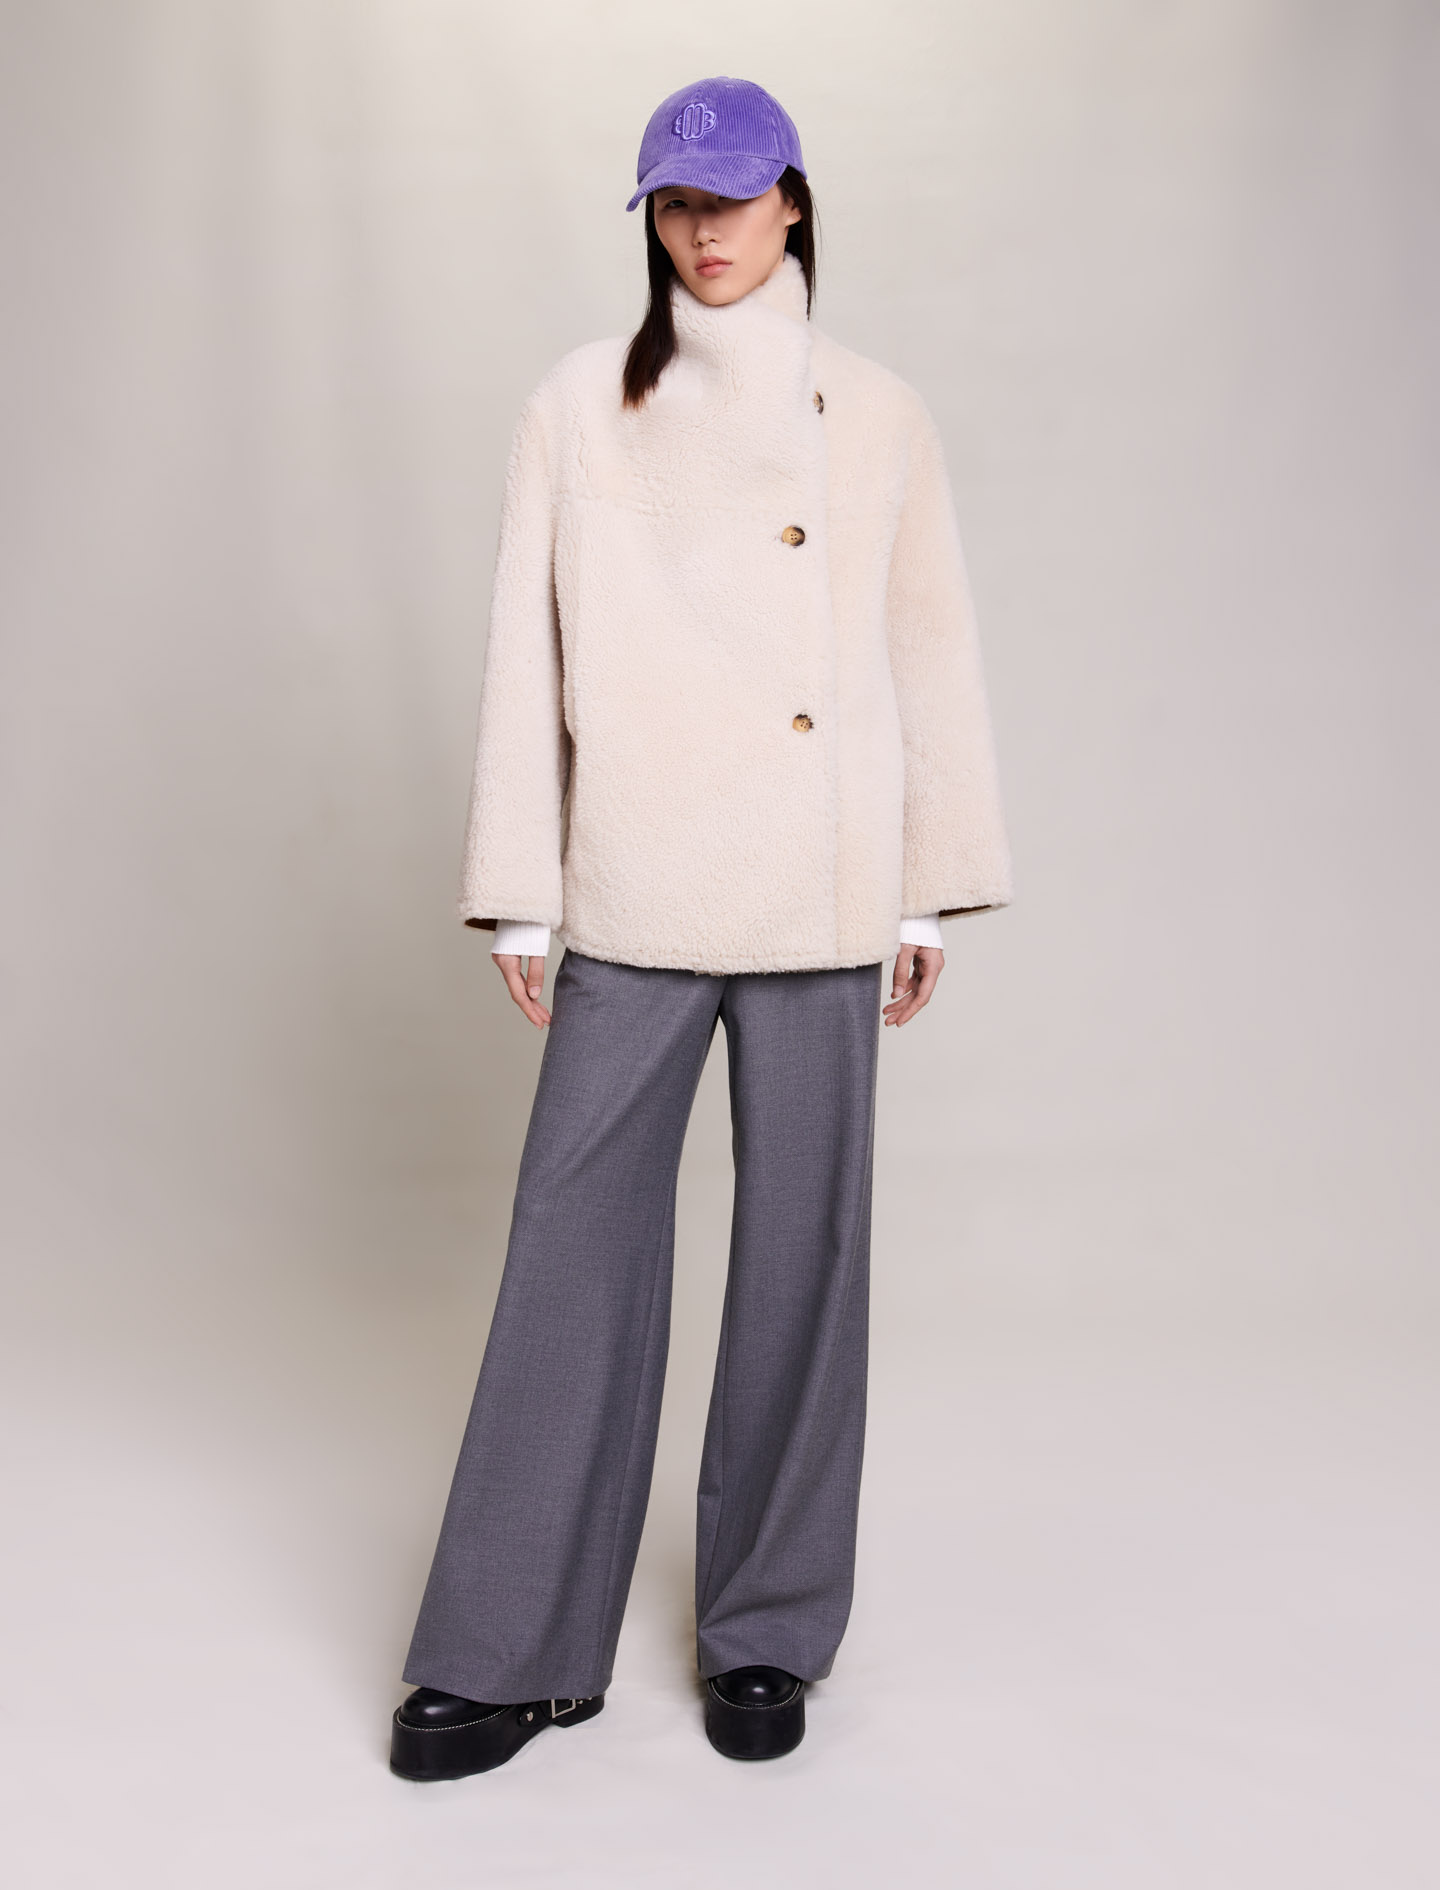 Maje Woman's lamb Pocket lining: Short reversible coat for Fall/Winter, in color Camel / Brown